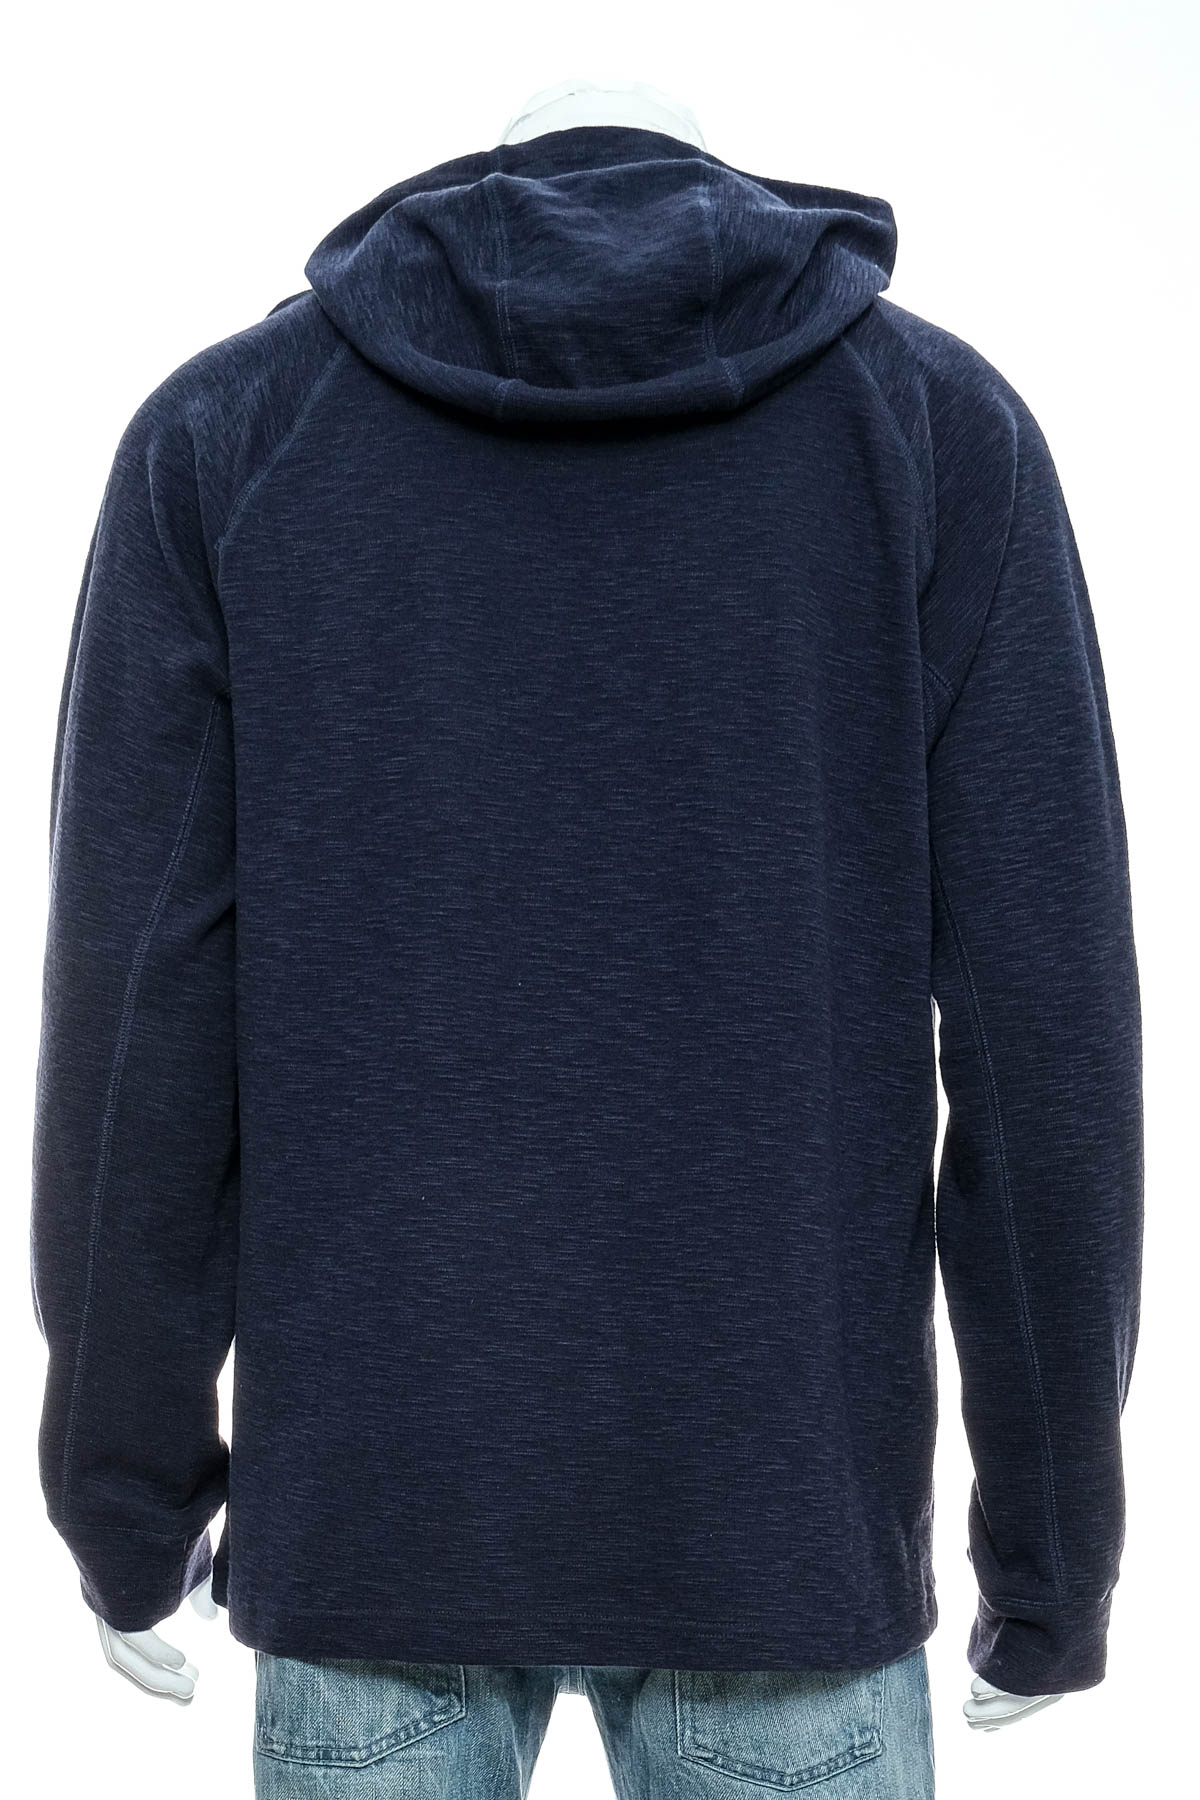 Men's sweater - APT. 9 - 1